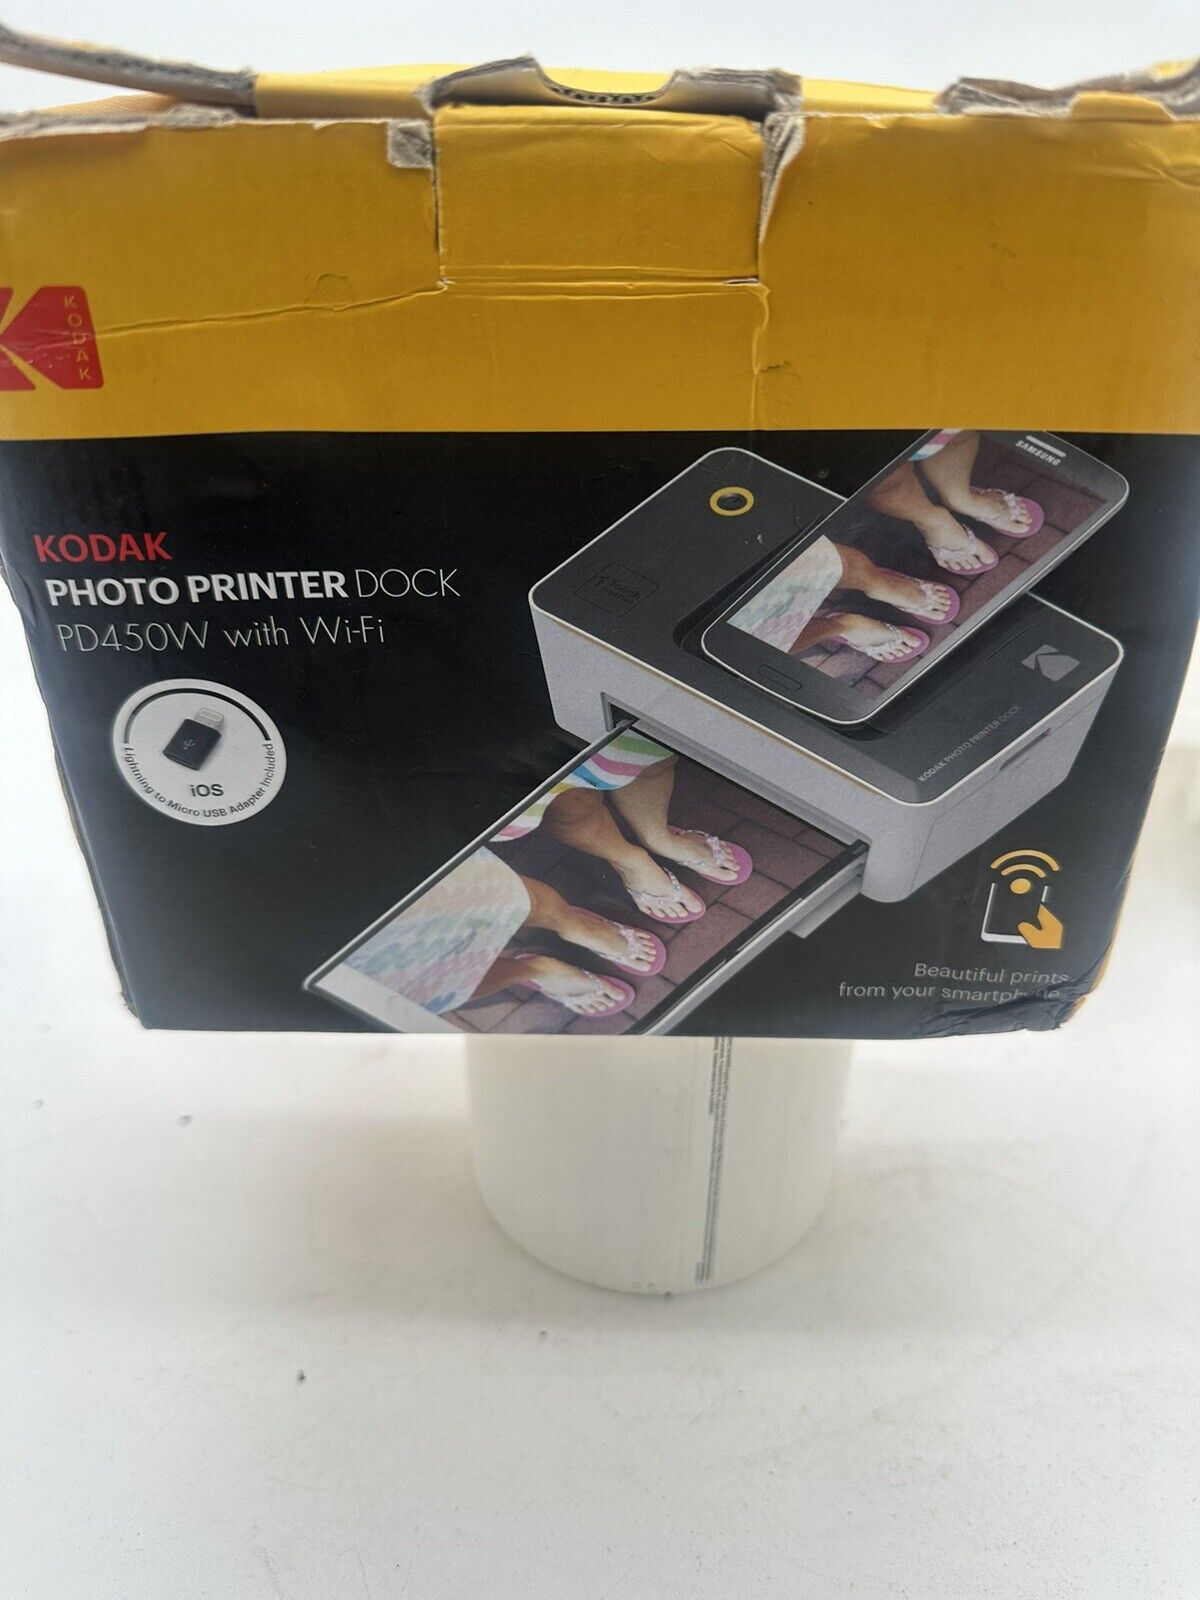 Kodak Photo Printer Dock PD450W with Wifi New in Box(23)